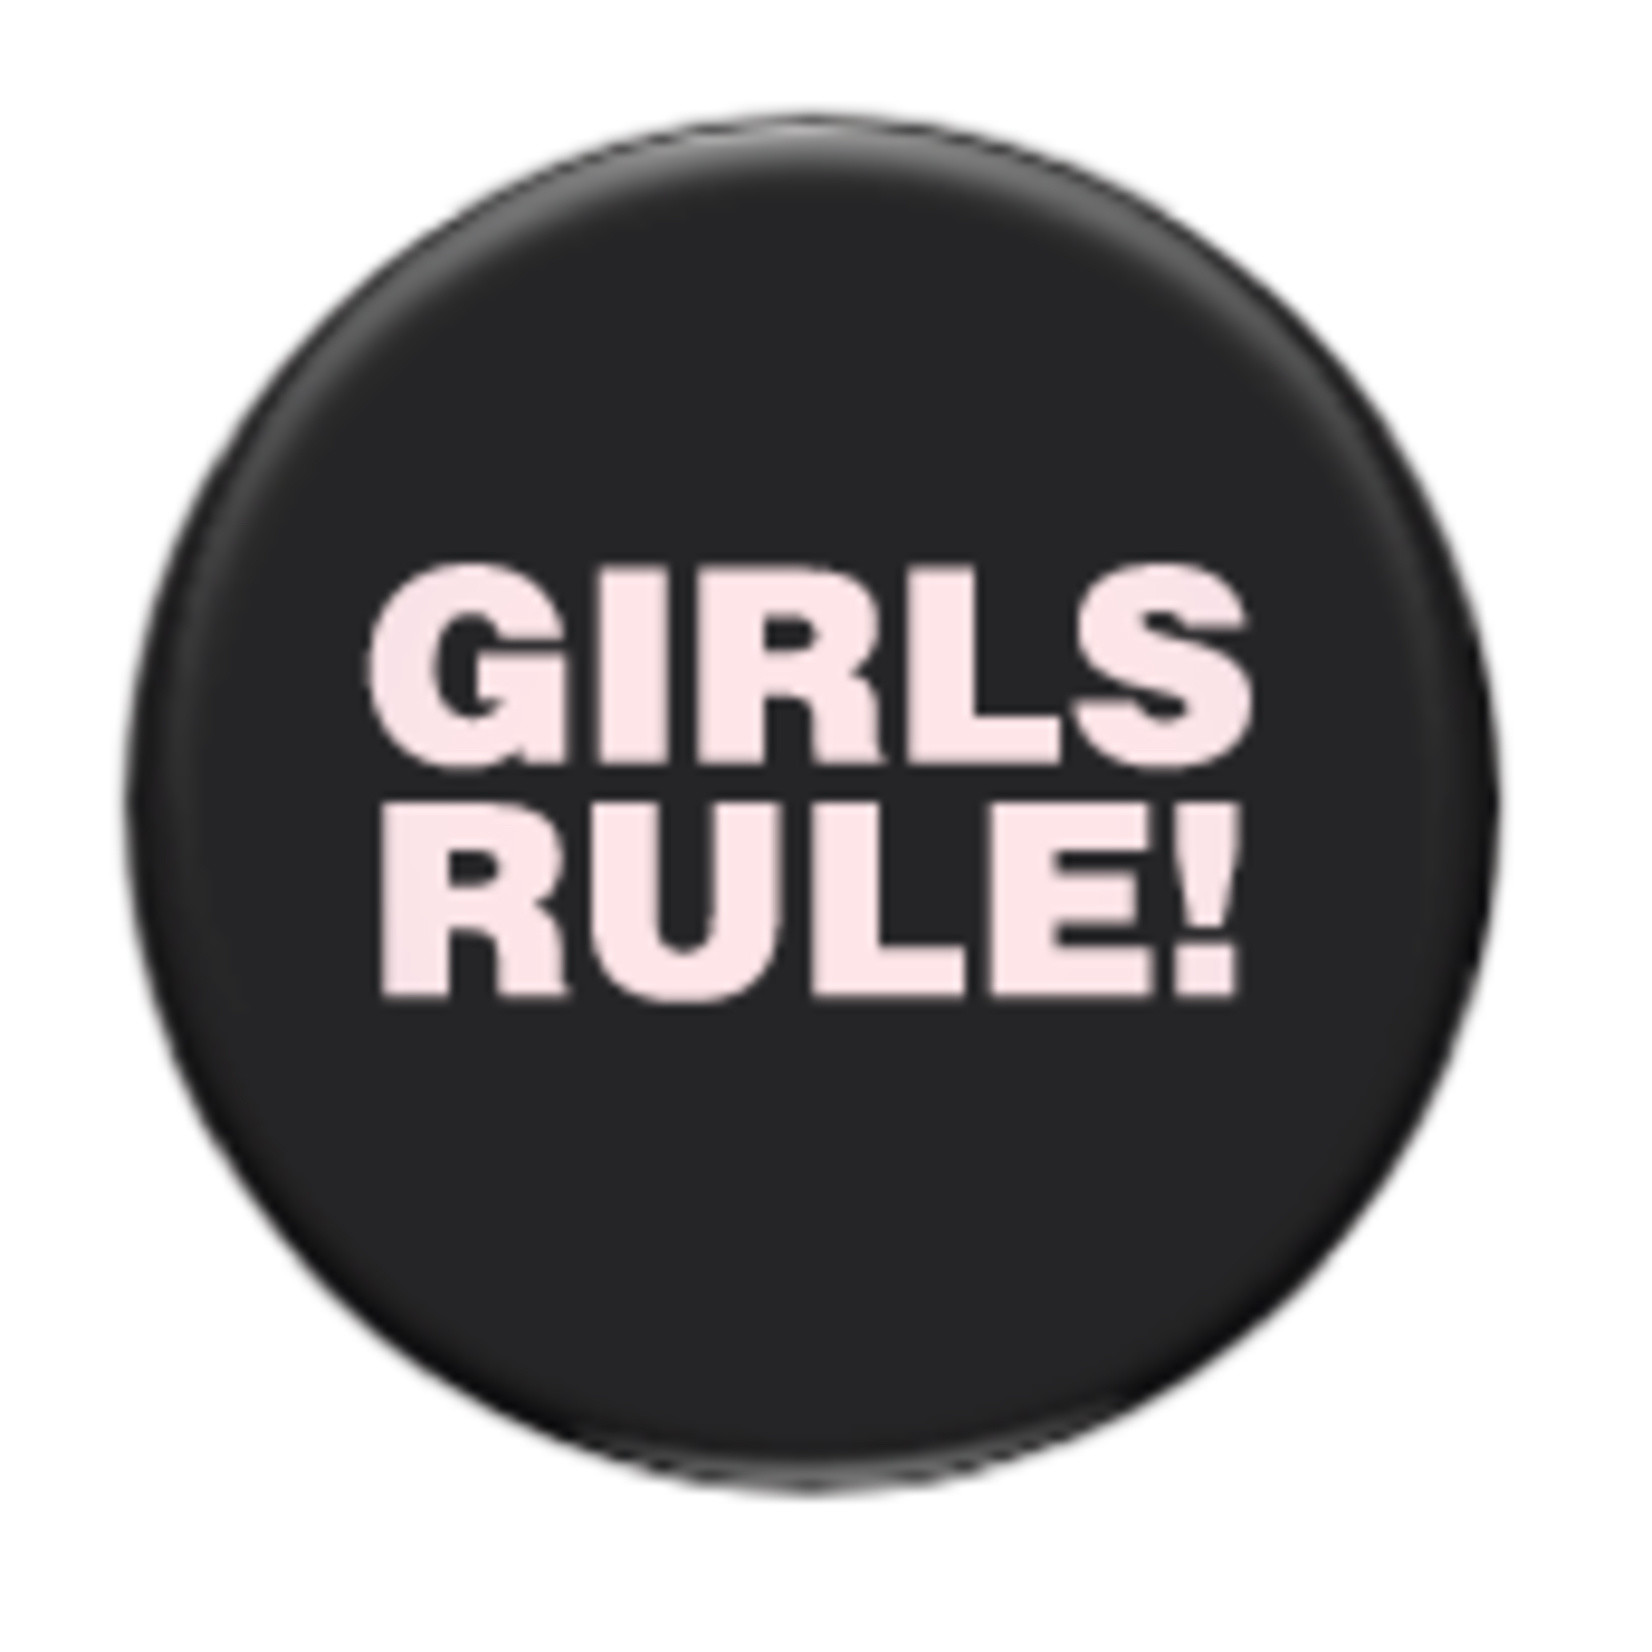 Magnet - Girls Rule!